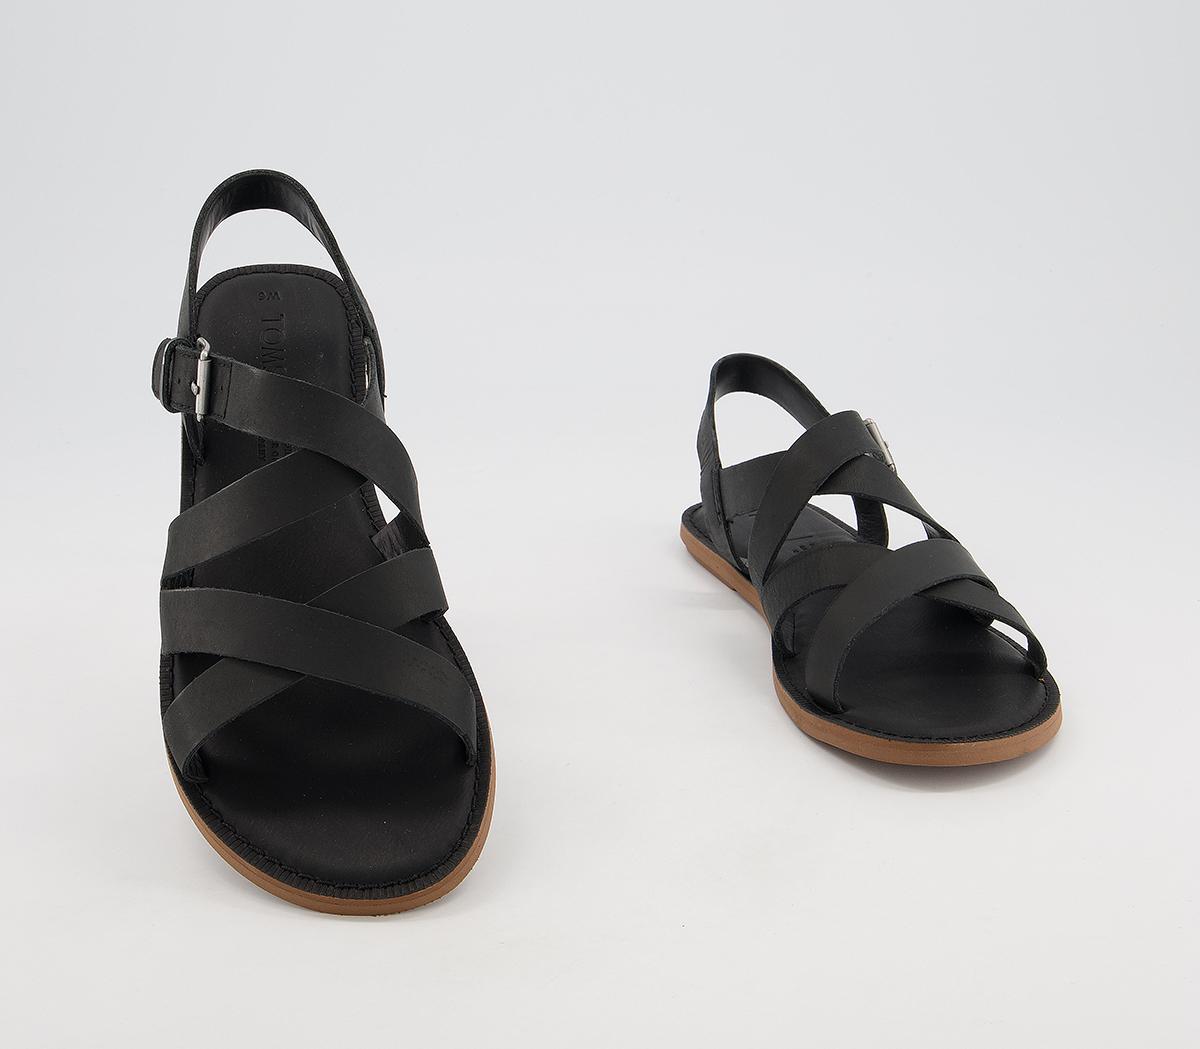 TOMS Sicily Sandals Black Leather - Women’s Sandals